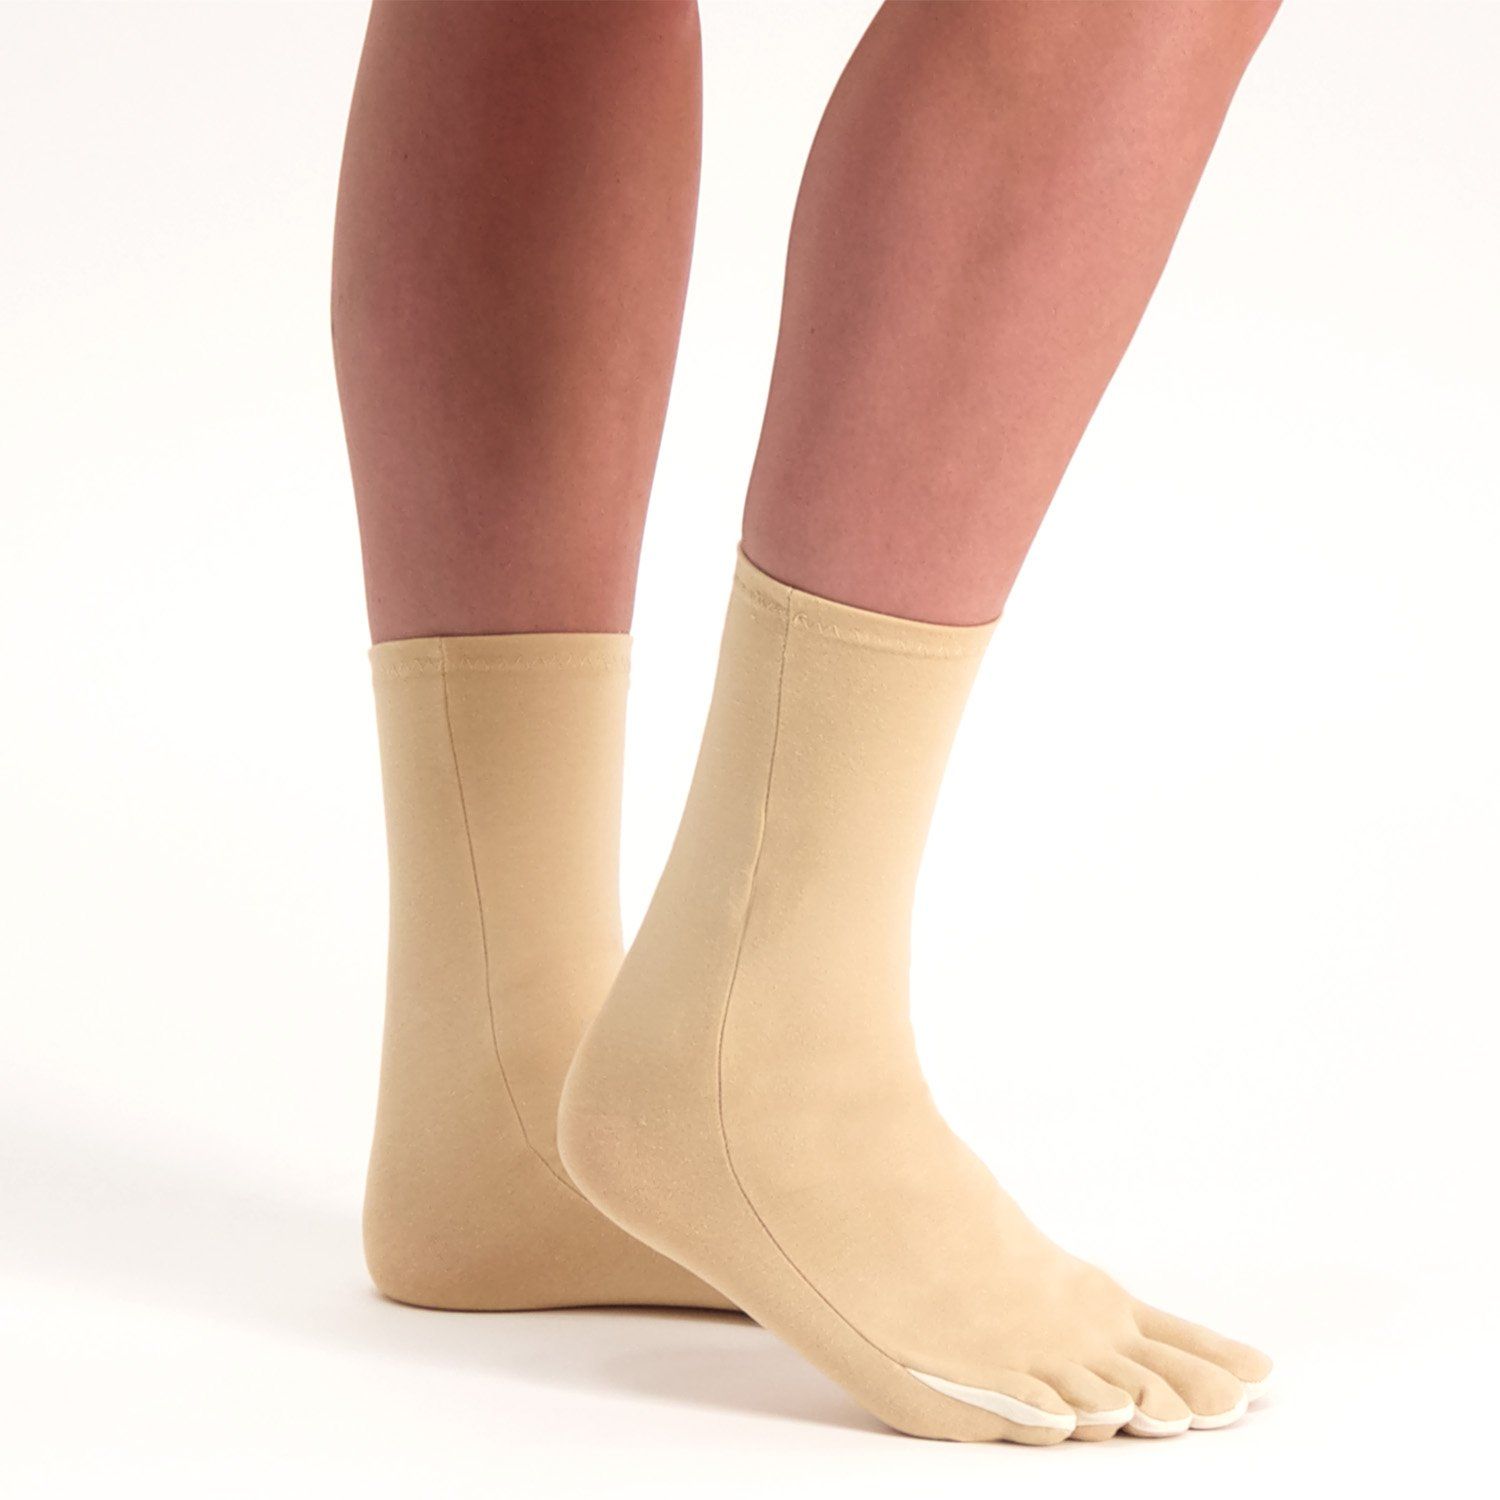 medidu rheumatoid arthritis osteoarthritis socks beige